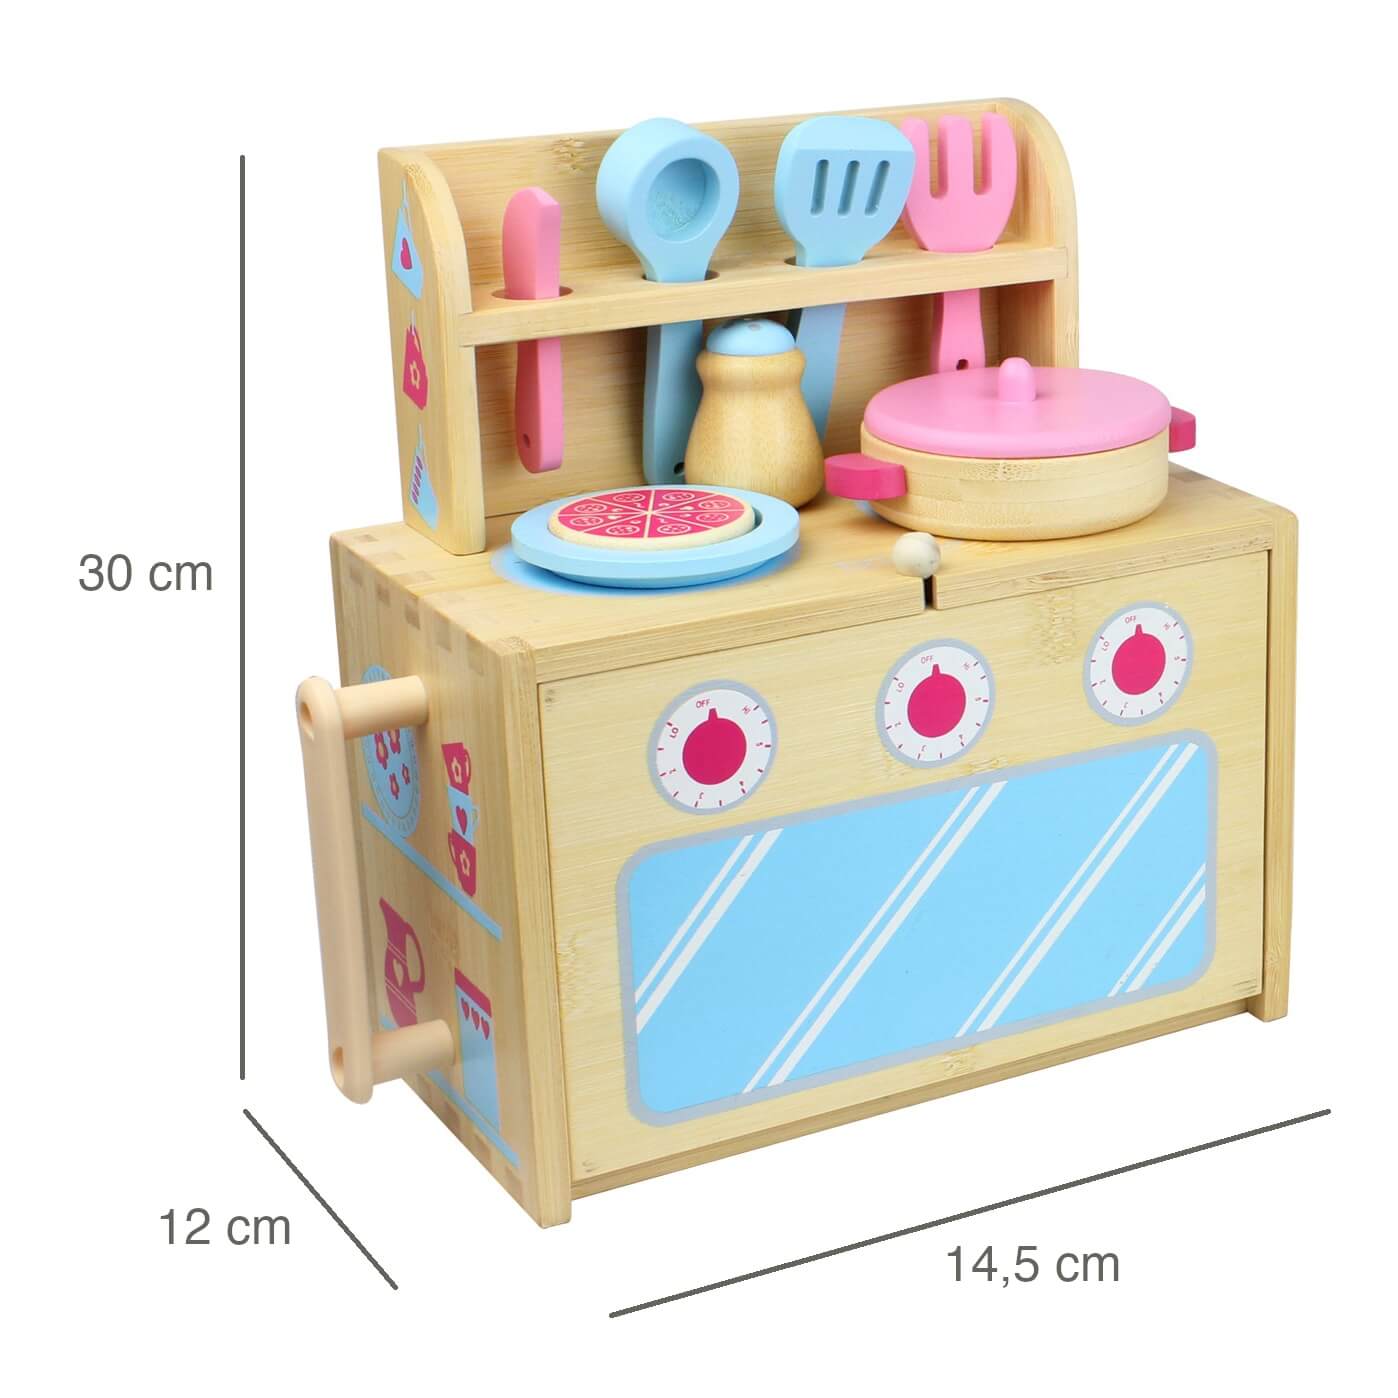 Kinderspielzeug Küche aus Holz